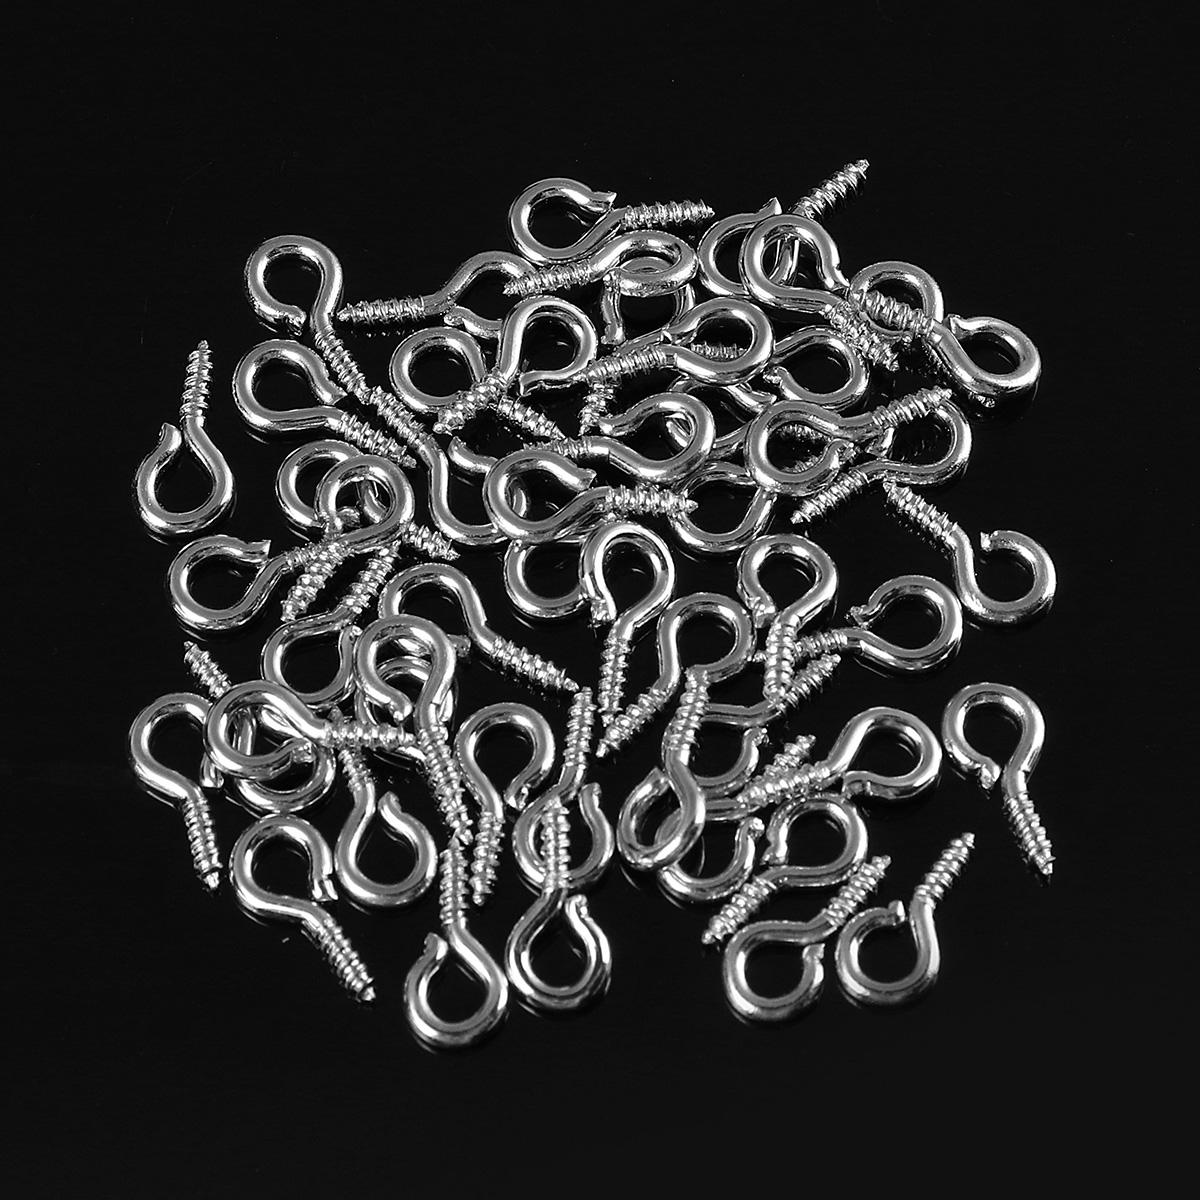 27 stuks dhz craft tools kit silicone crystal mold maken sieraden hanger resin casting